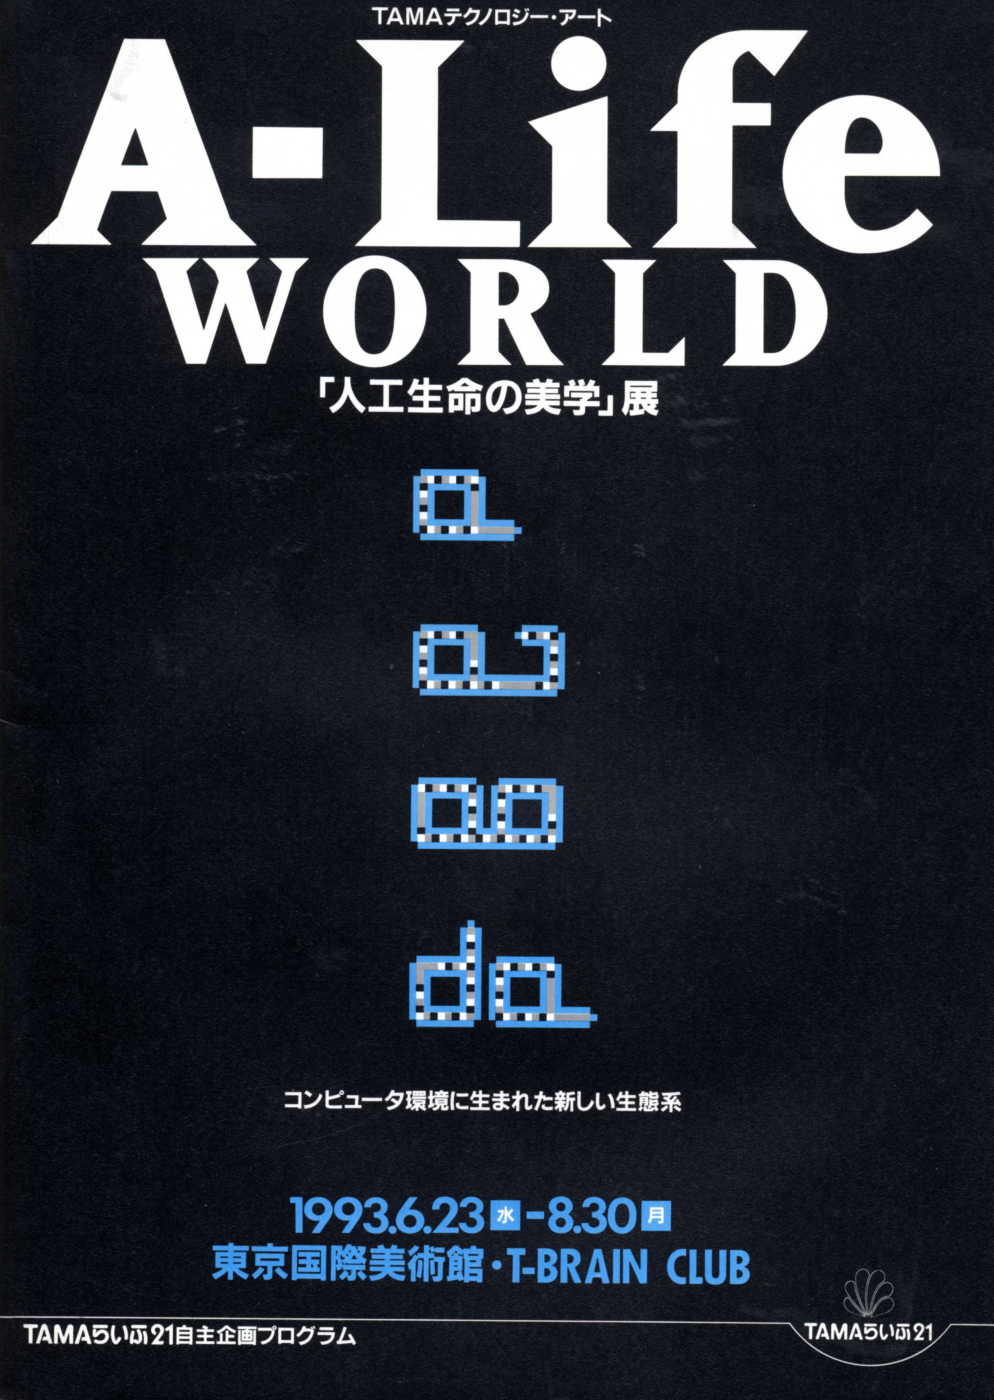 1993 A-Life WORLD「人工生命の美学」